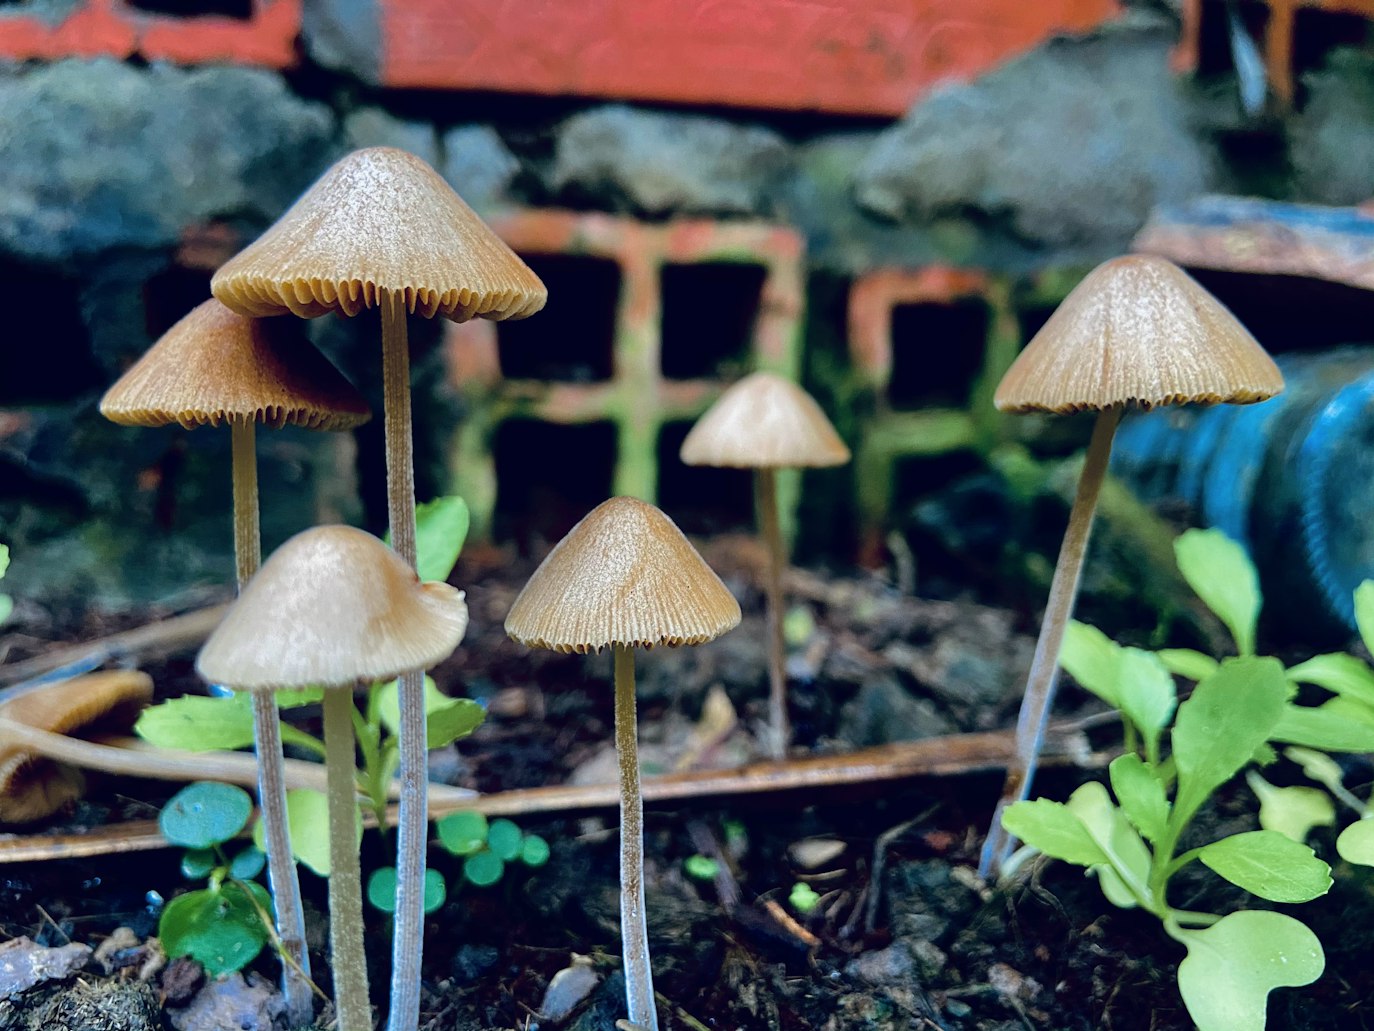 Mushrooms growing on compost